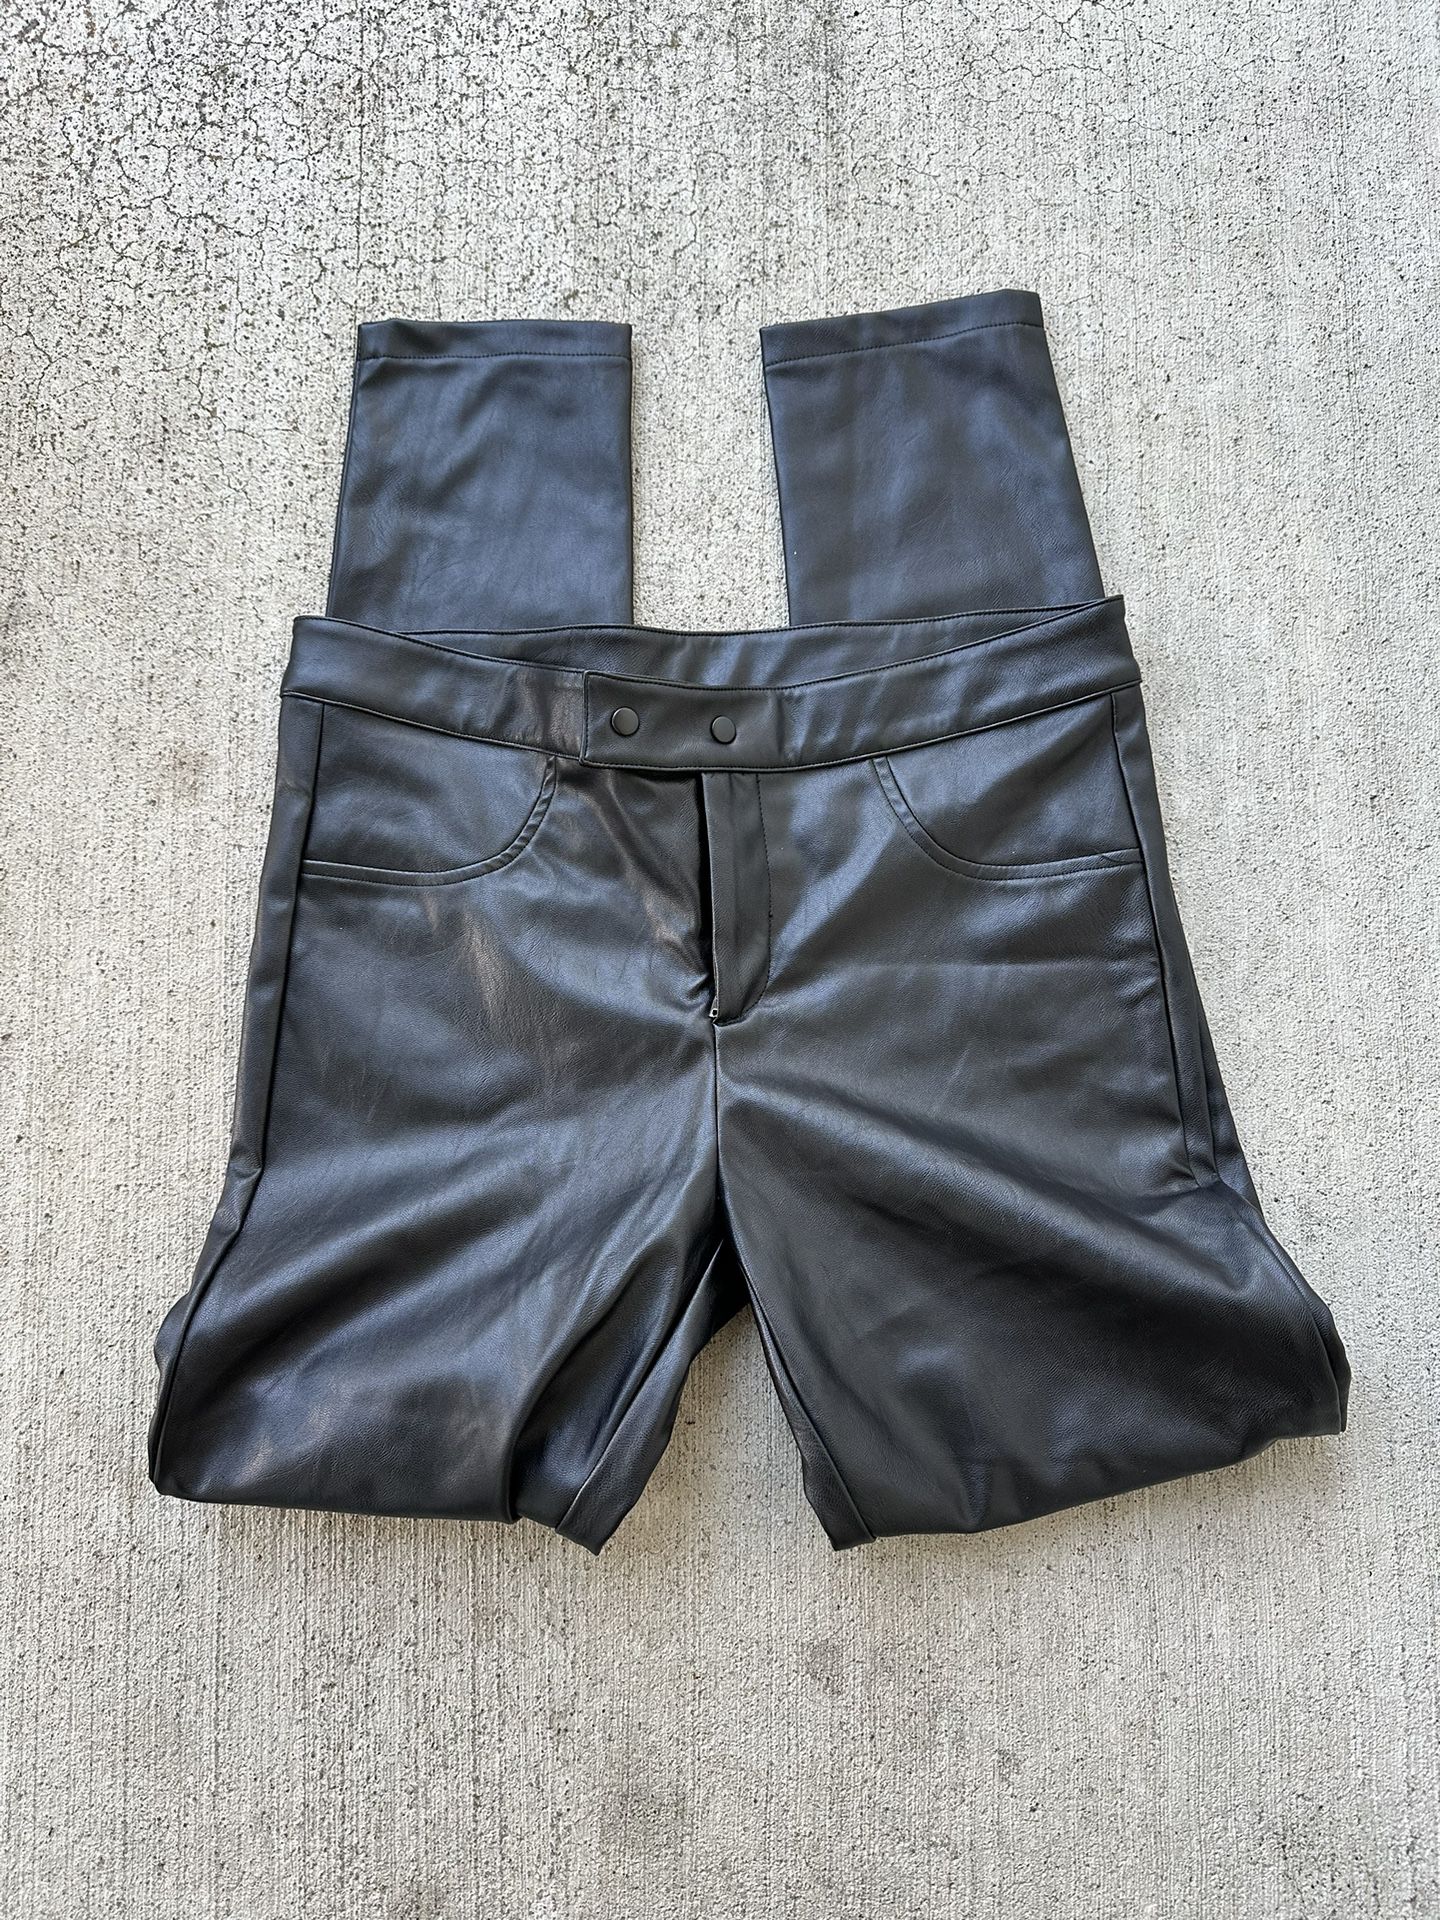 Maxik Faux Leather Pants Black Moto leather Pants size L